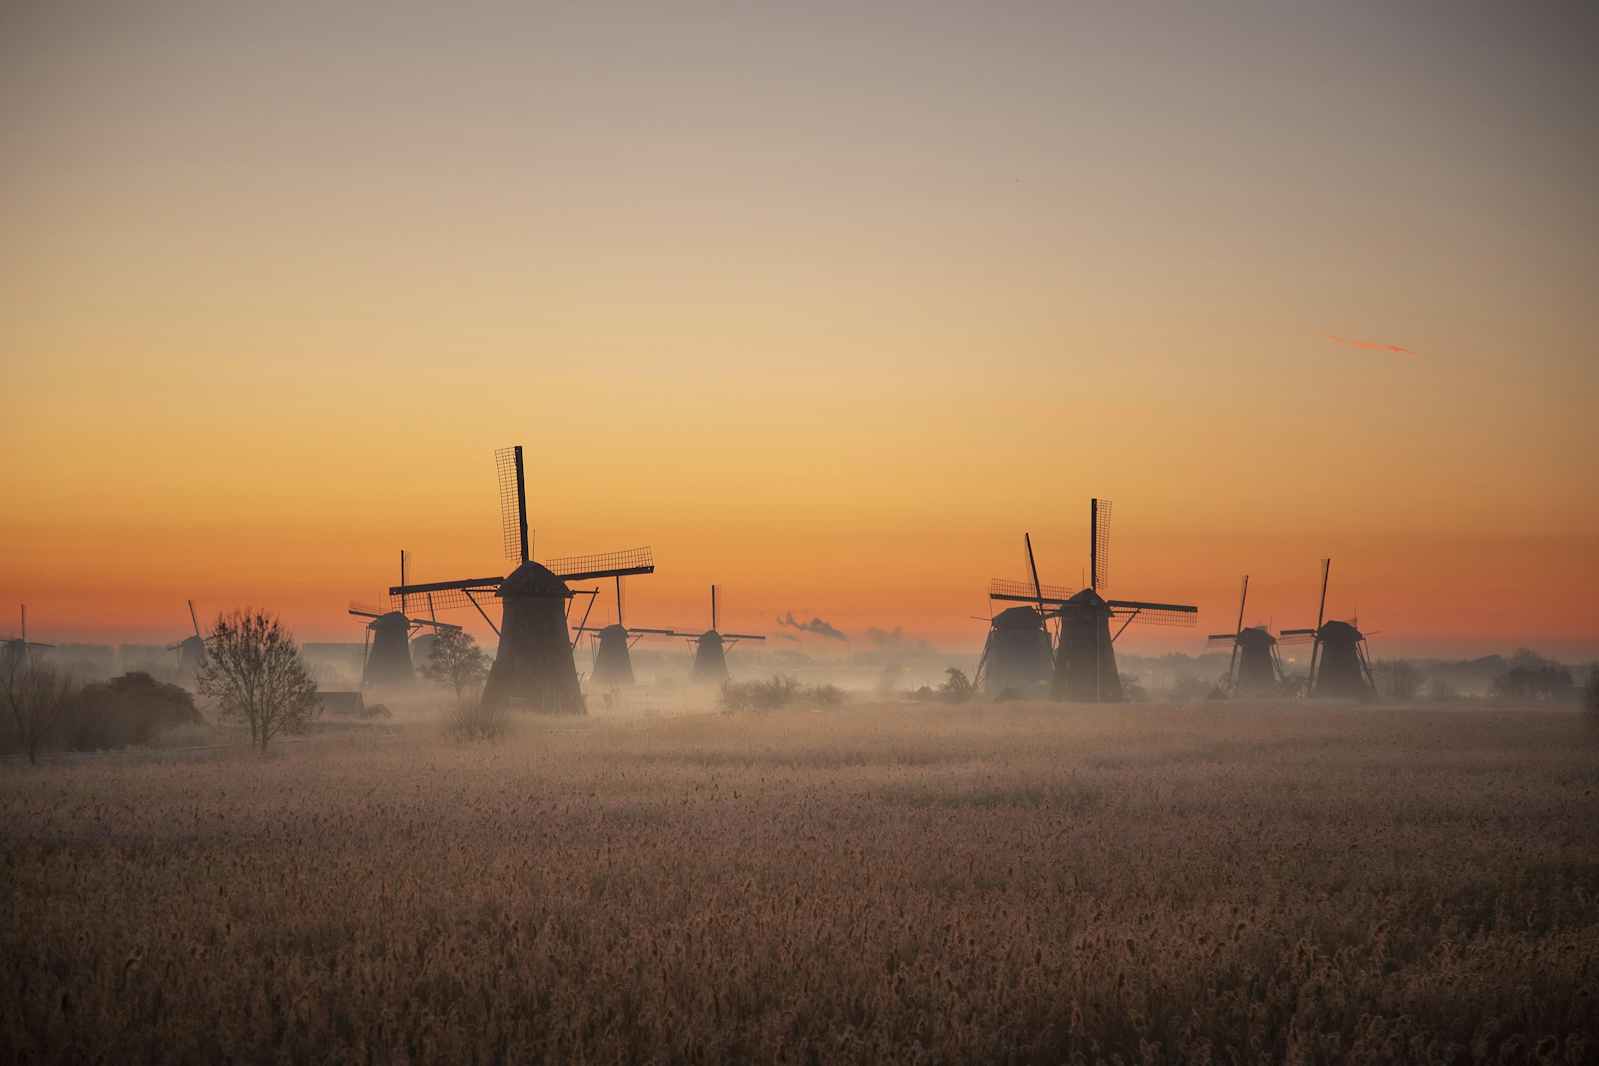 Kinderdijk windmills in the mist (Credit: Claire Droppert)